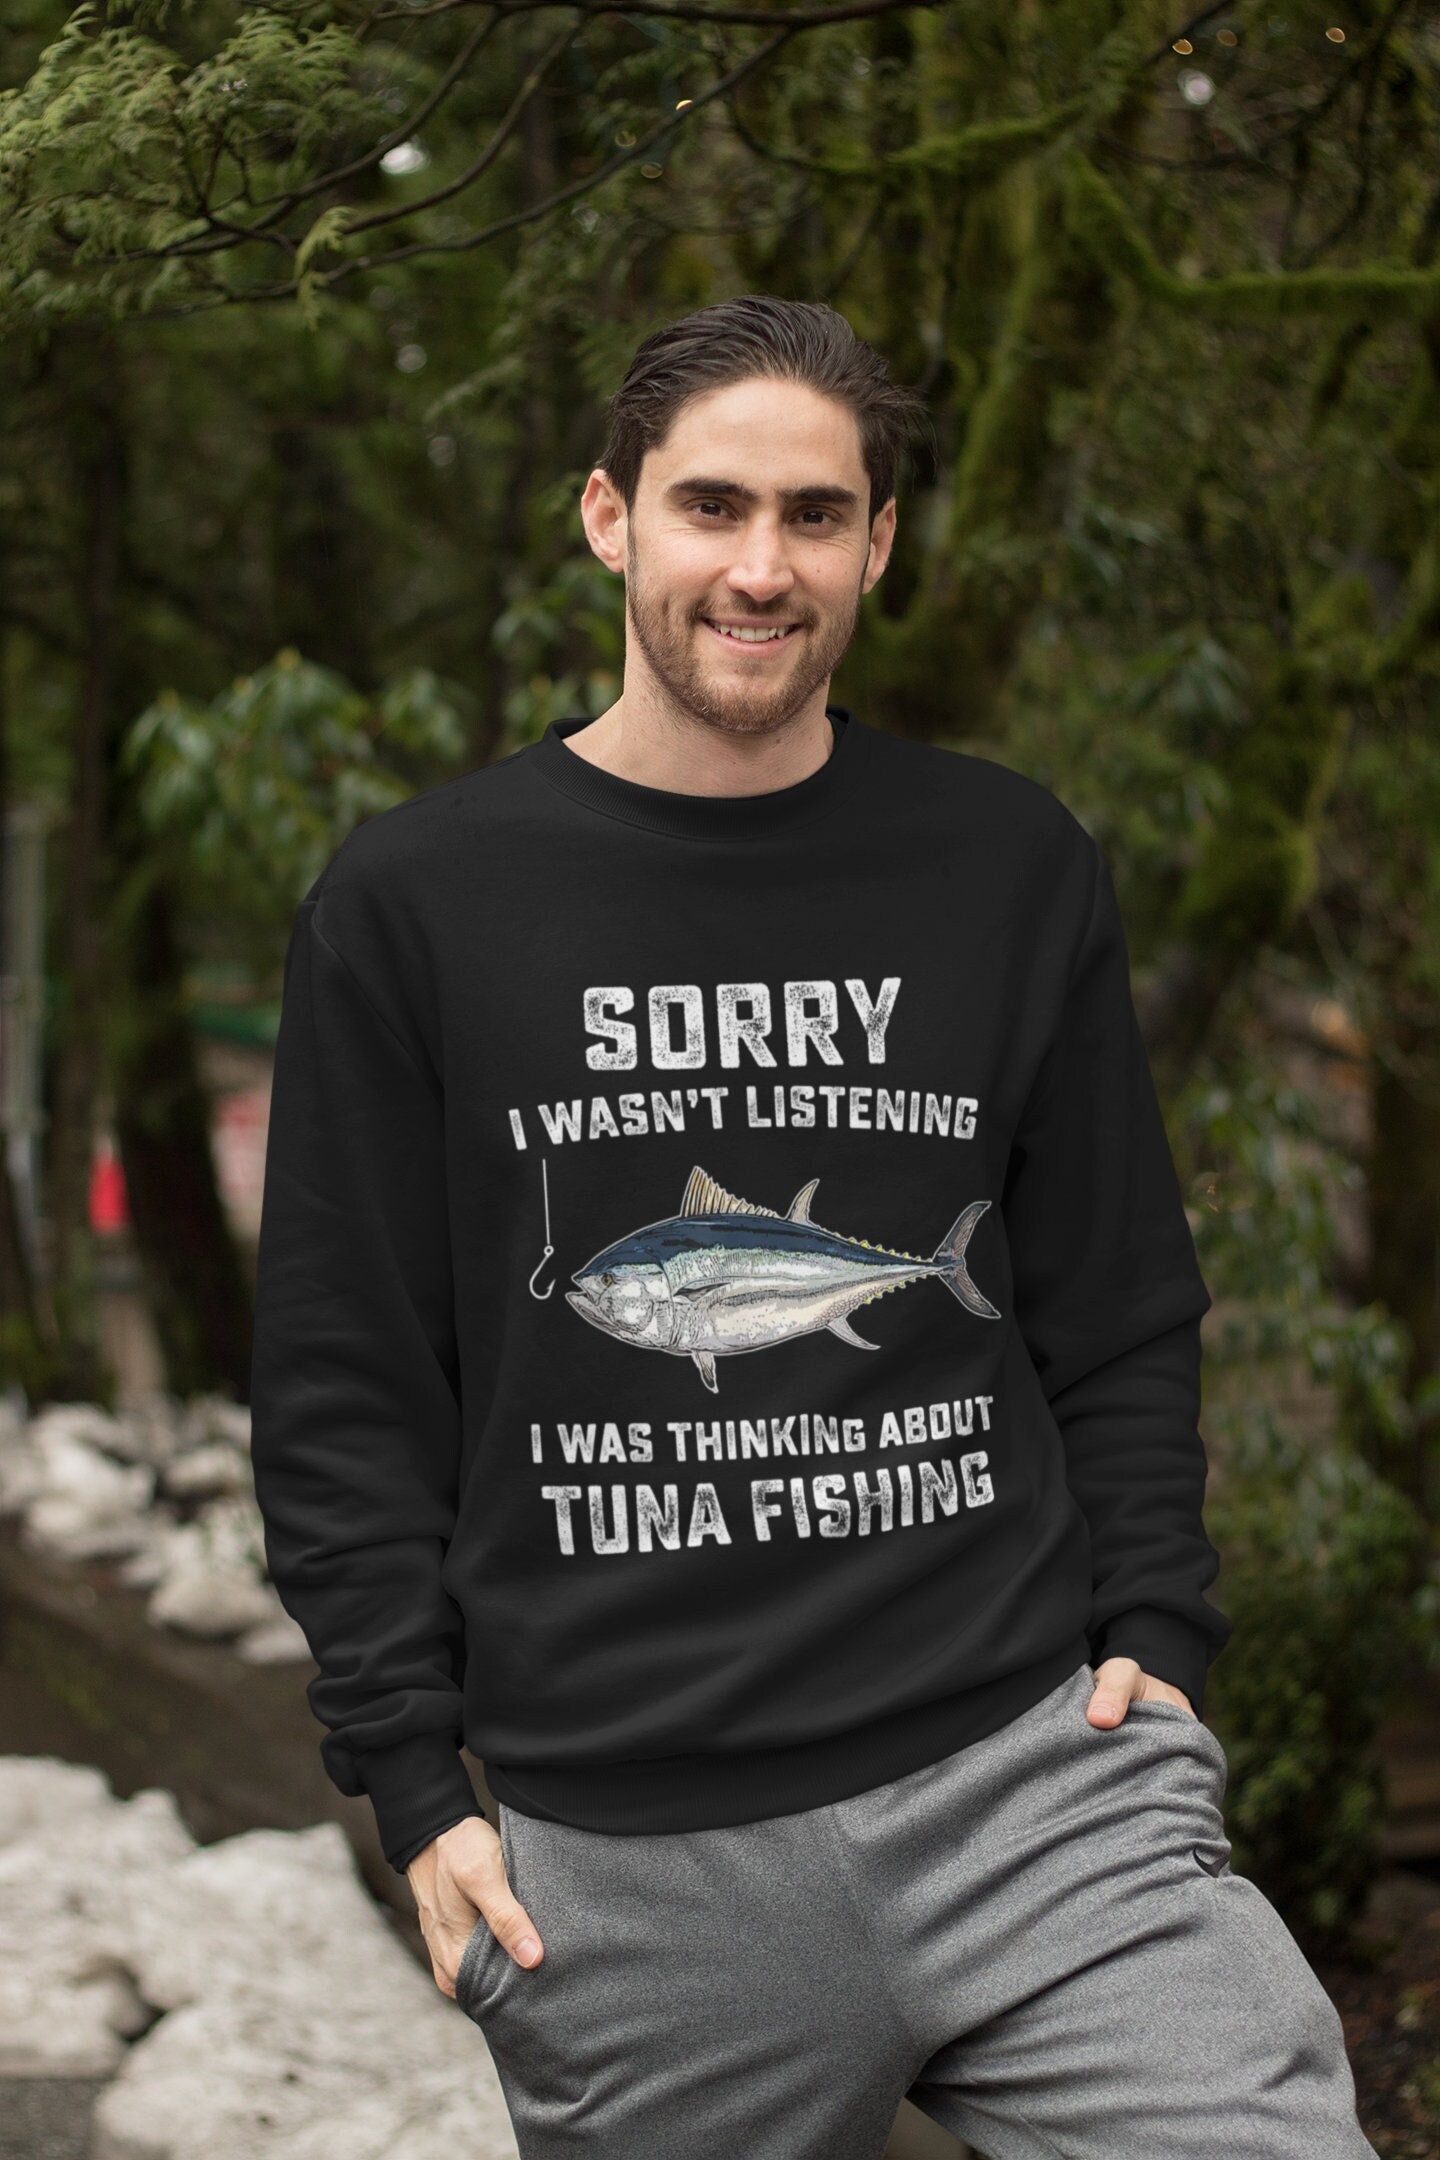 Tuna or Not Tuna, A Funny T-Shirt for Fishermen with a Sense of Humor, Tuna  Fishing Fun shirt